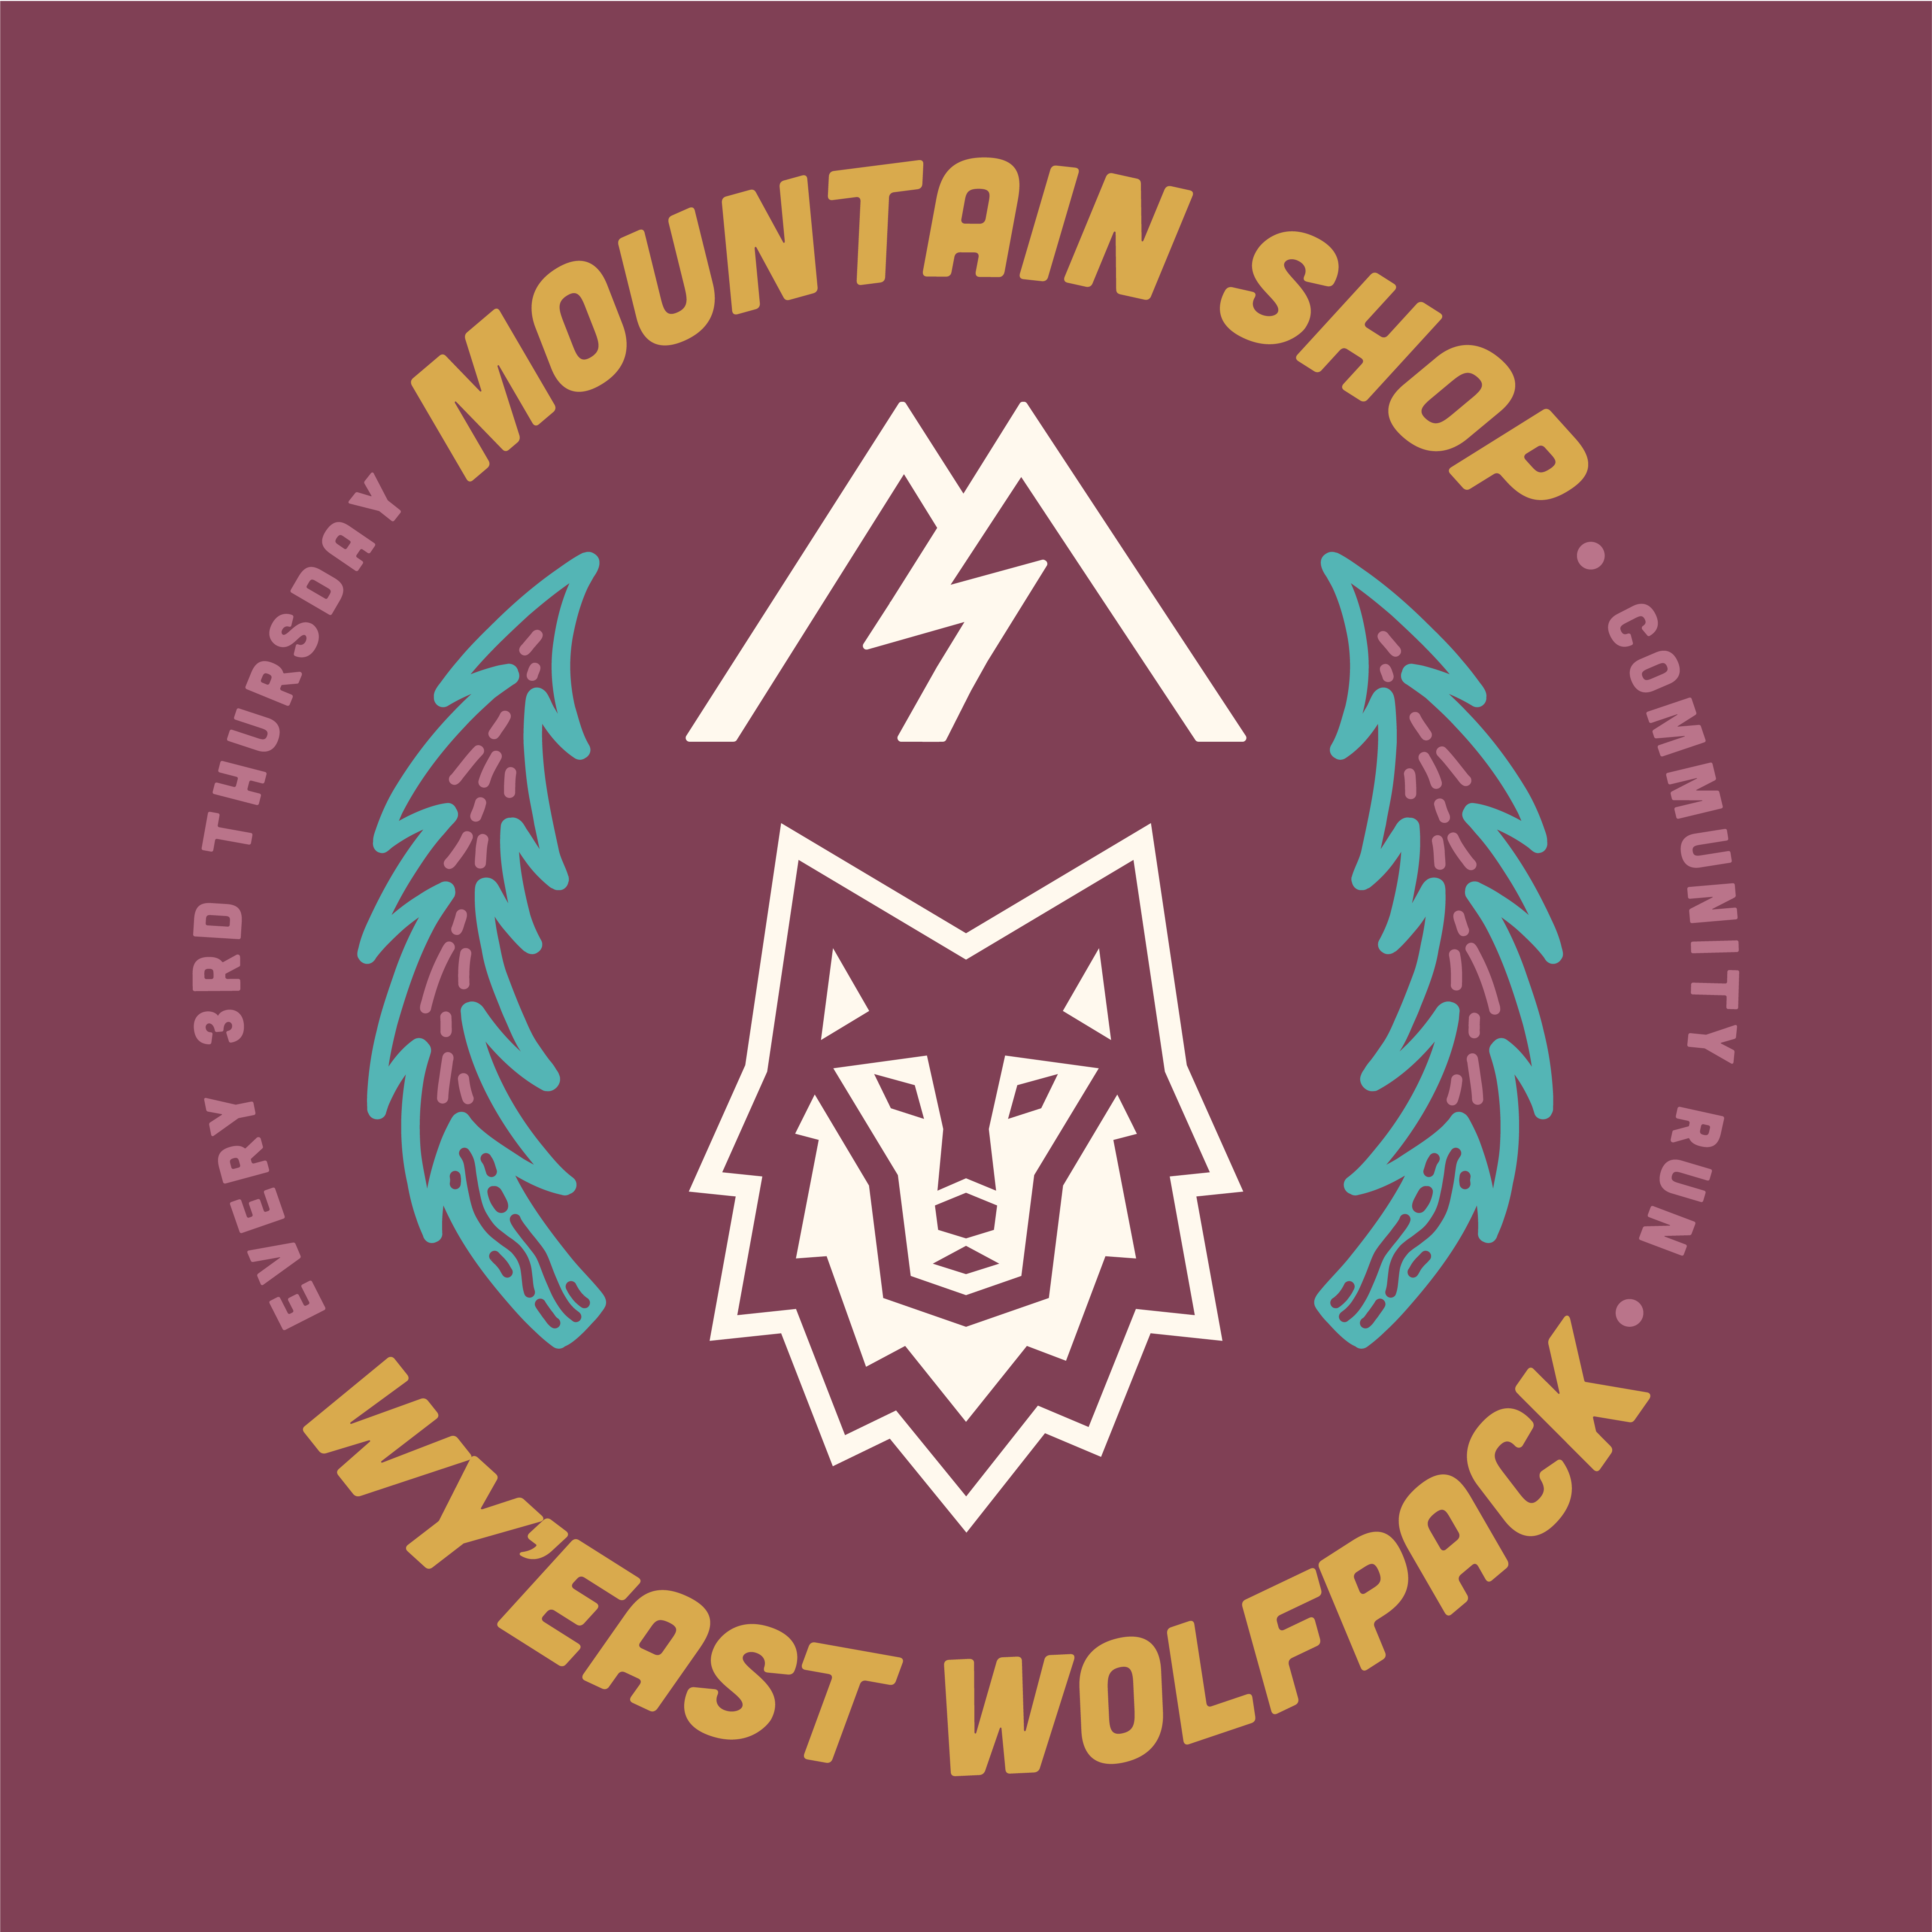 Wy'east Wolfpack + Mountain Shop Run